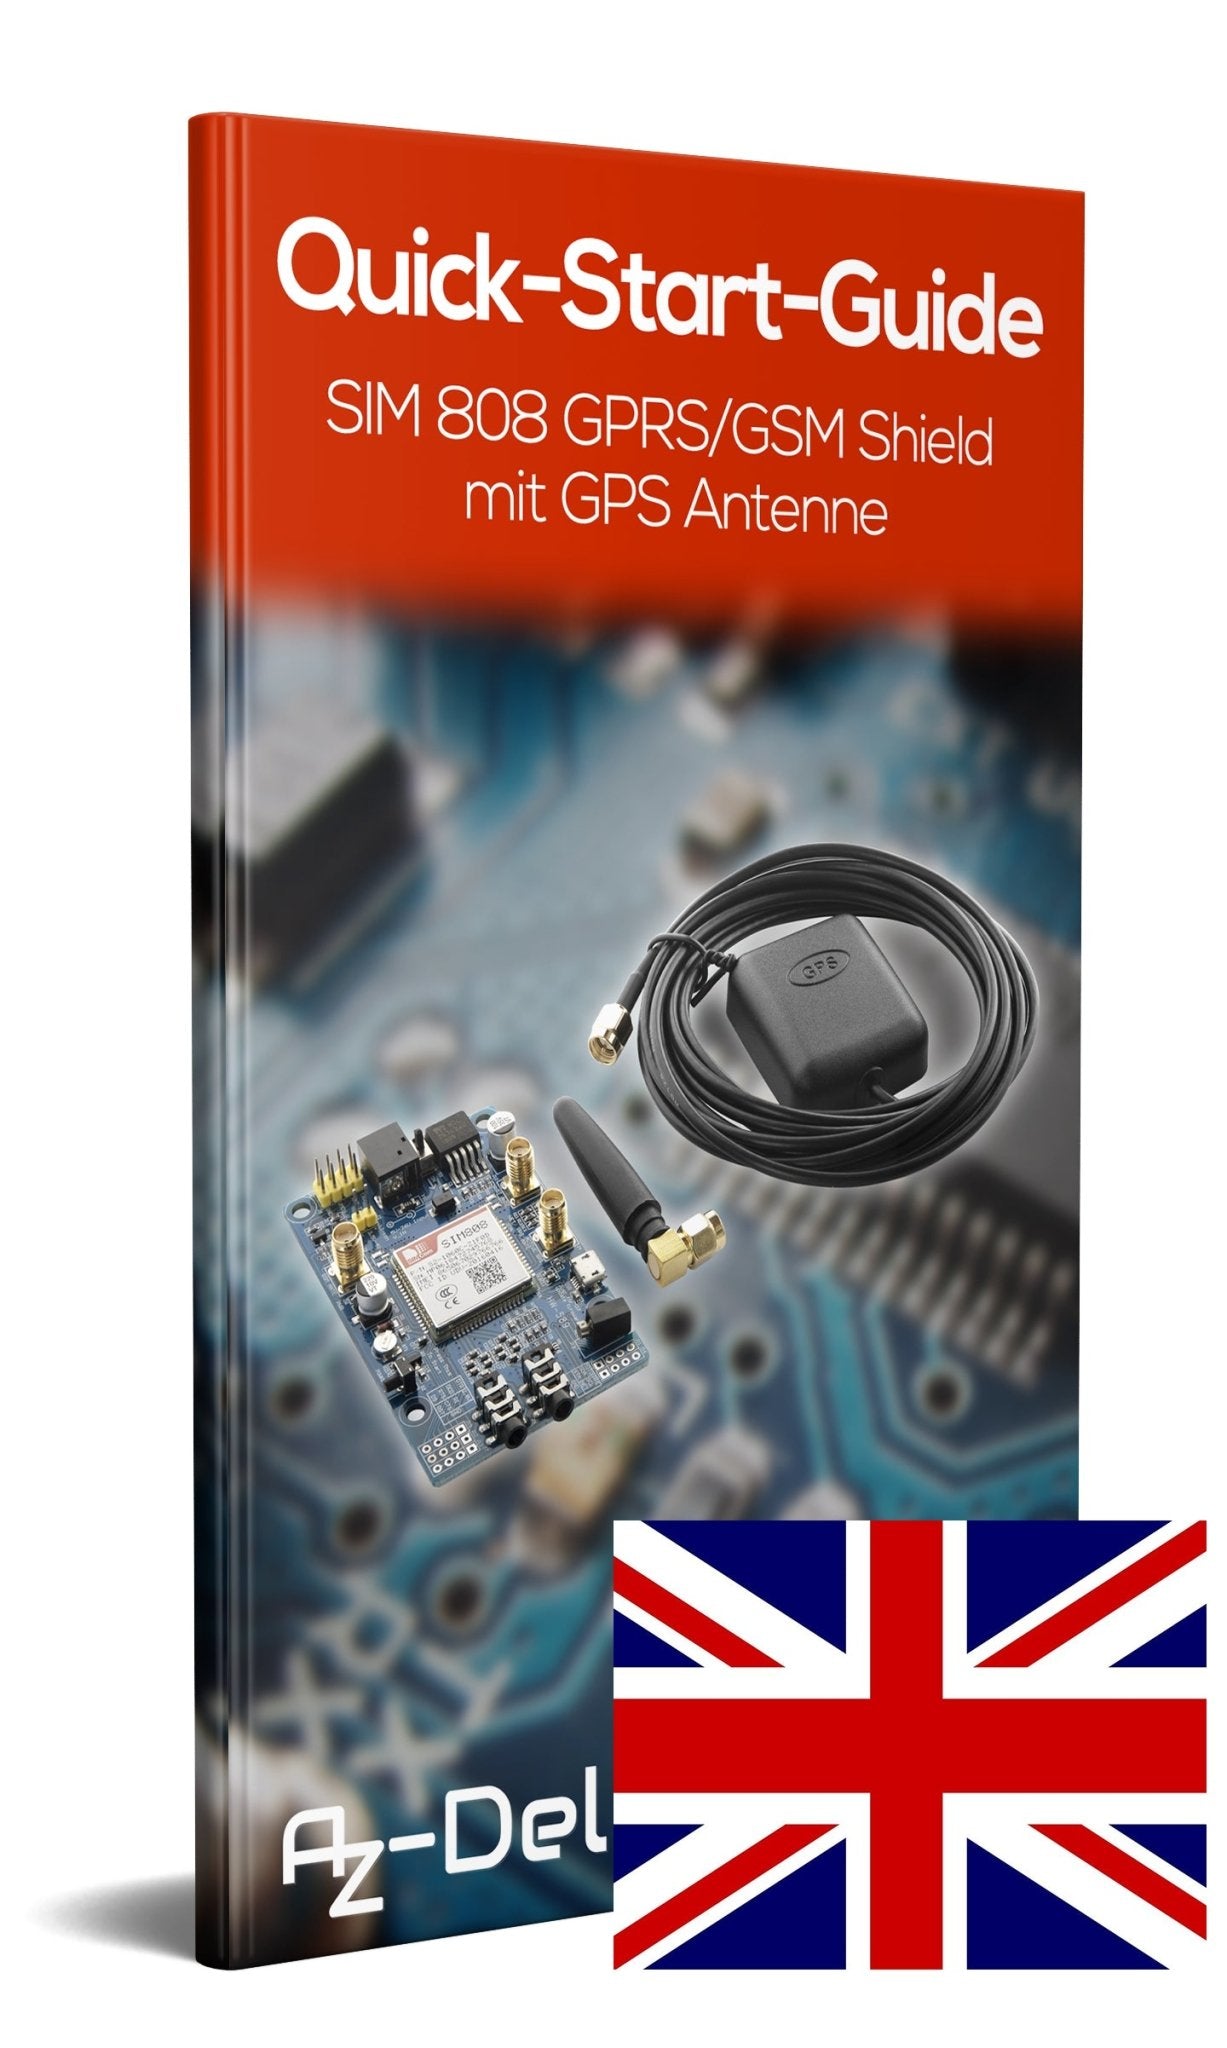 SIM 808 GPRS/GSM Shield mit GPS Antenne - AZ-Delivery